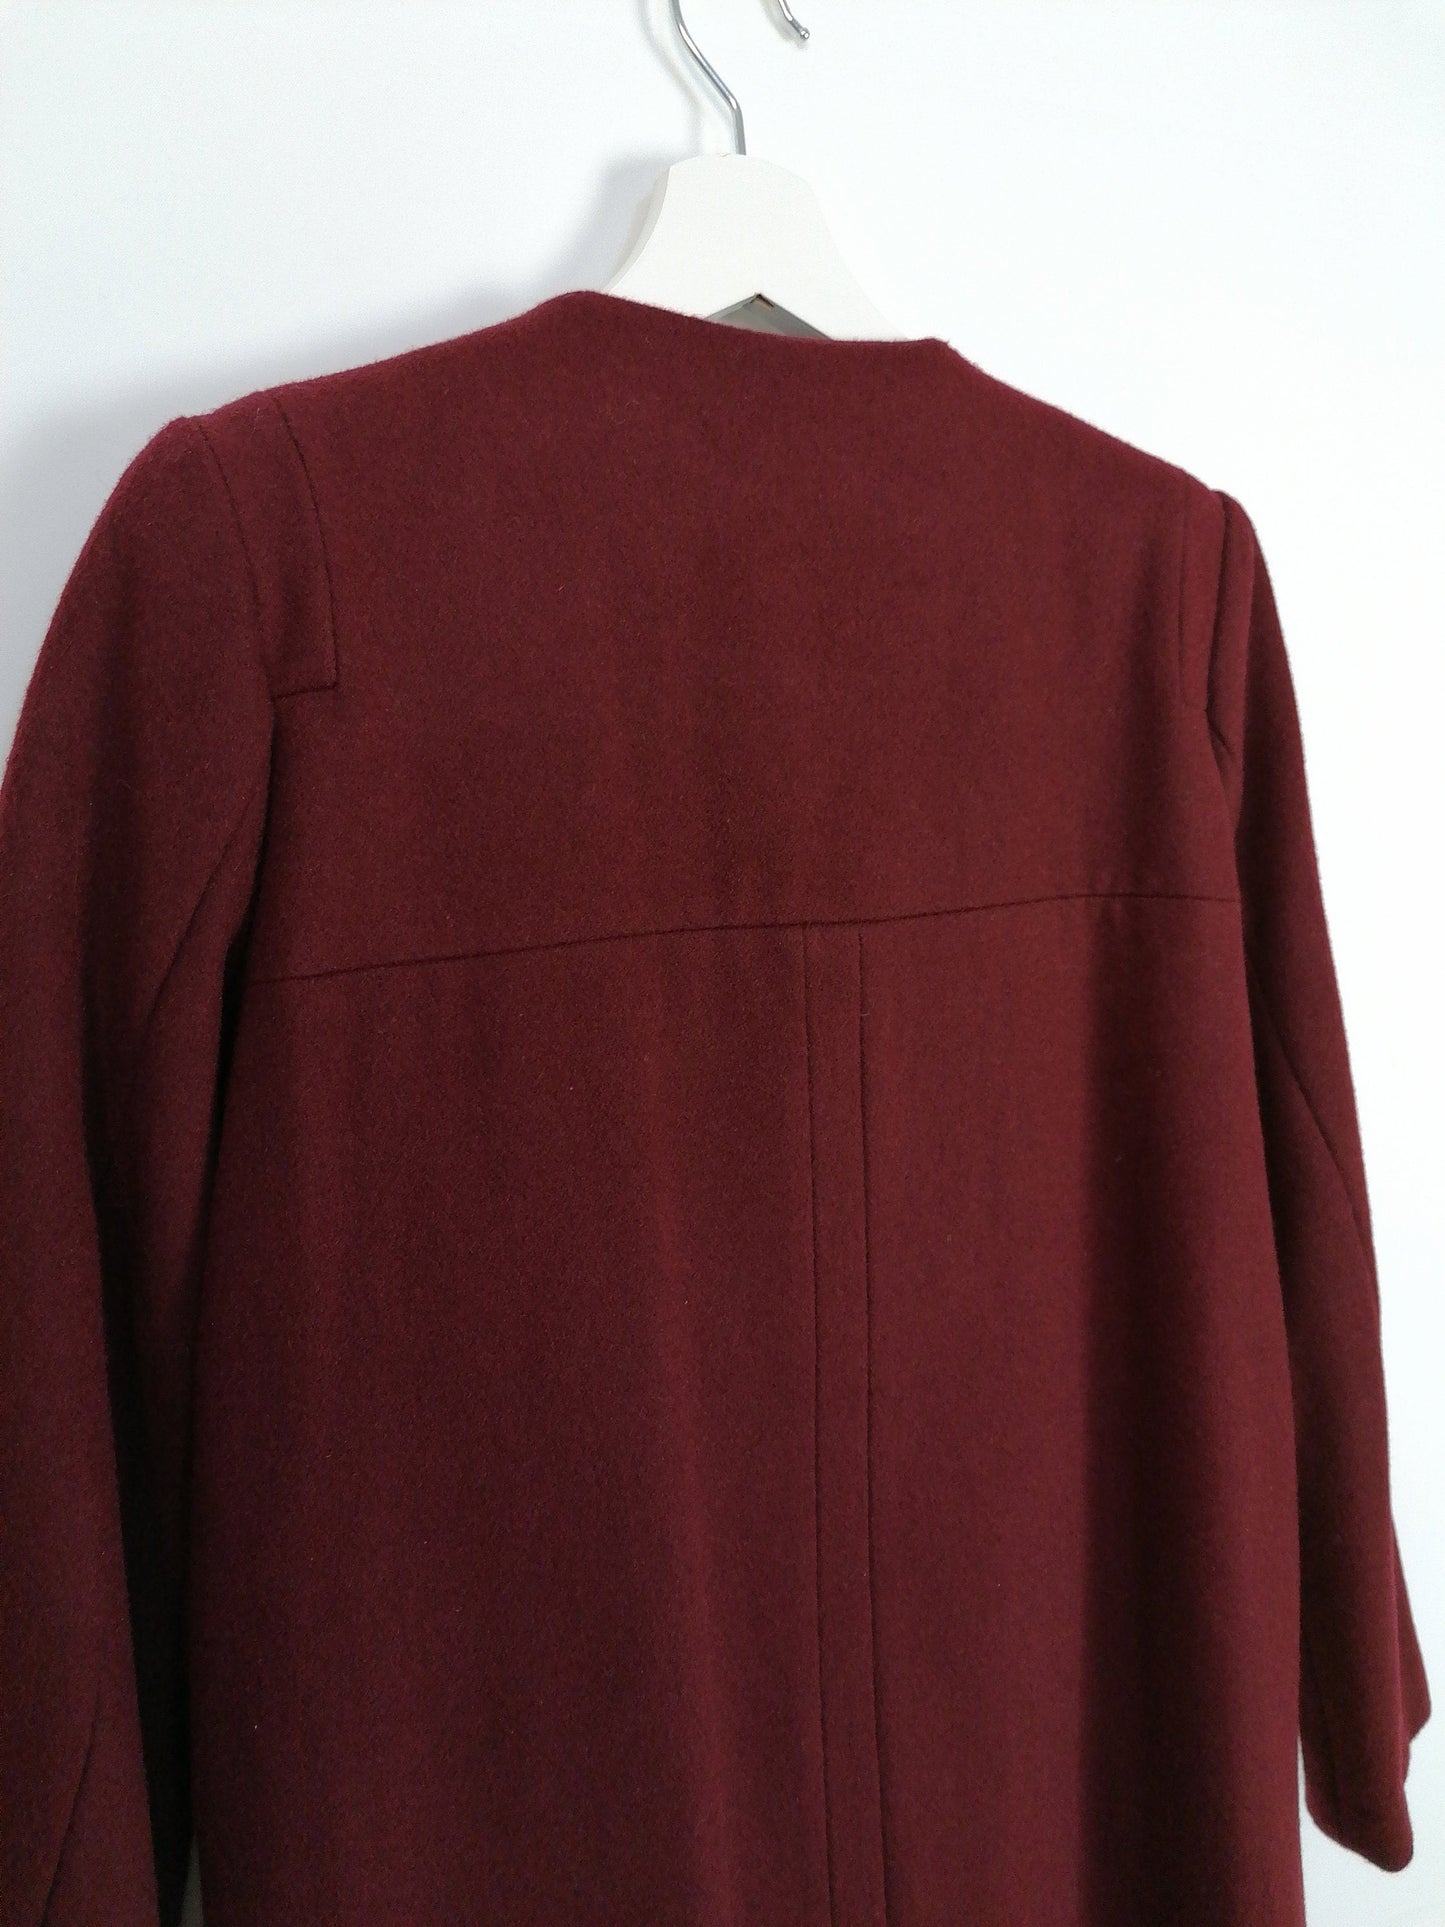 Burgundy Wool Coat - size S